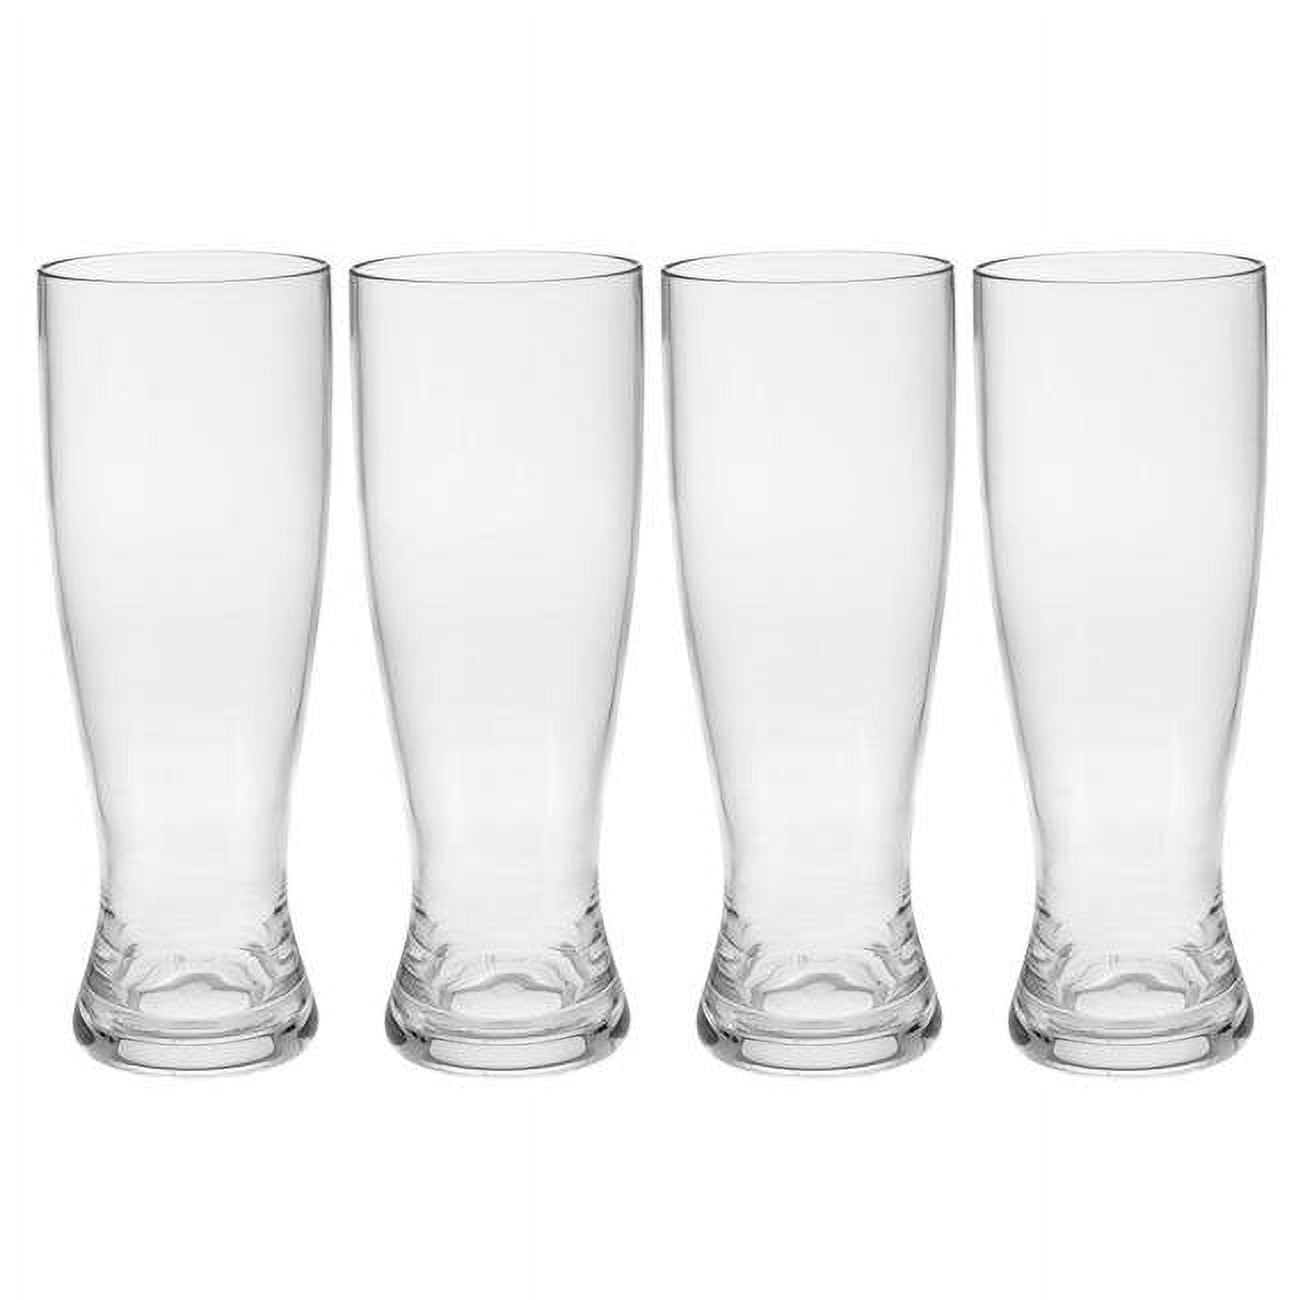 Burns Glass Jumbo Craft Pilsner Beer Glasses - 24 oz - Set of 2 Clear